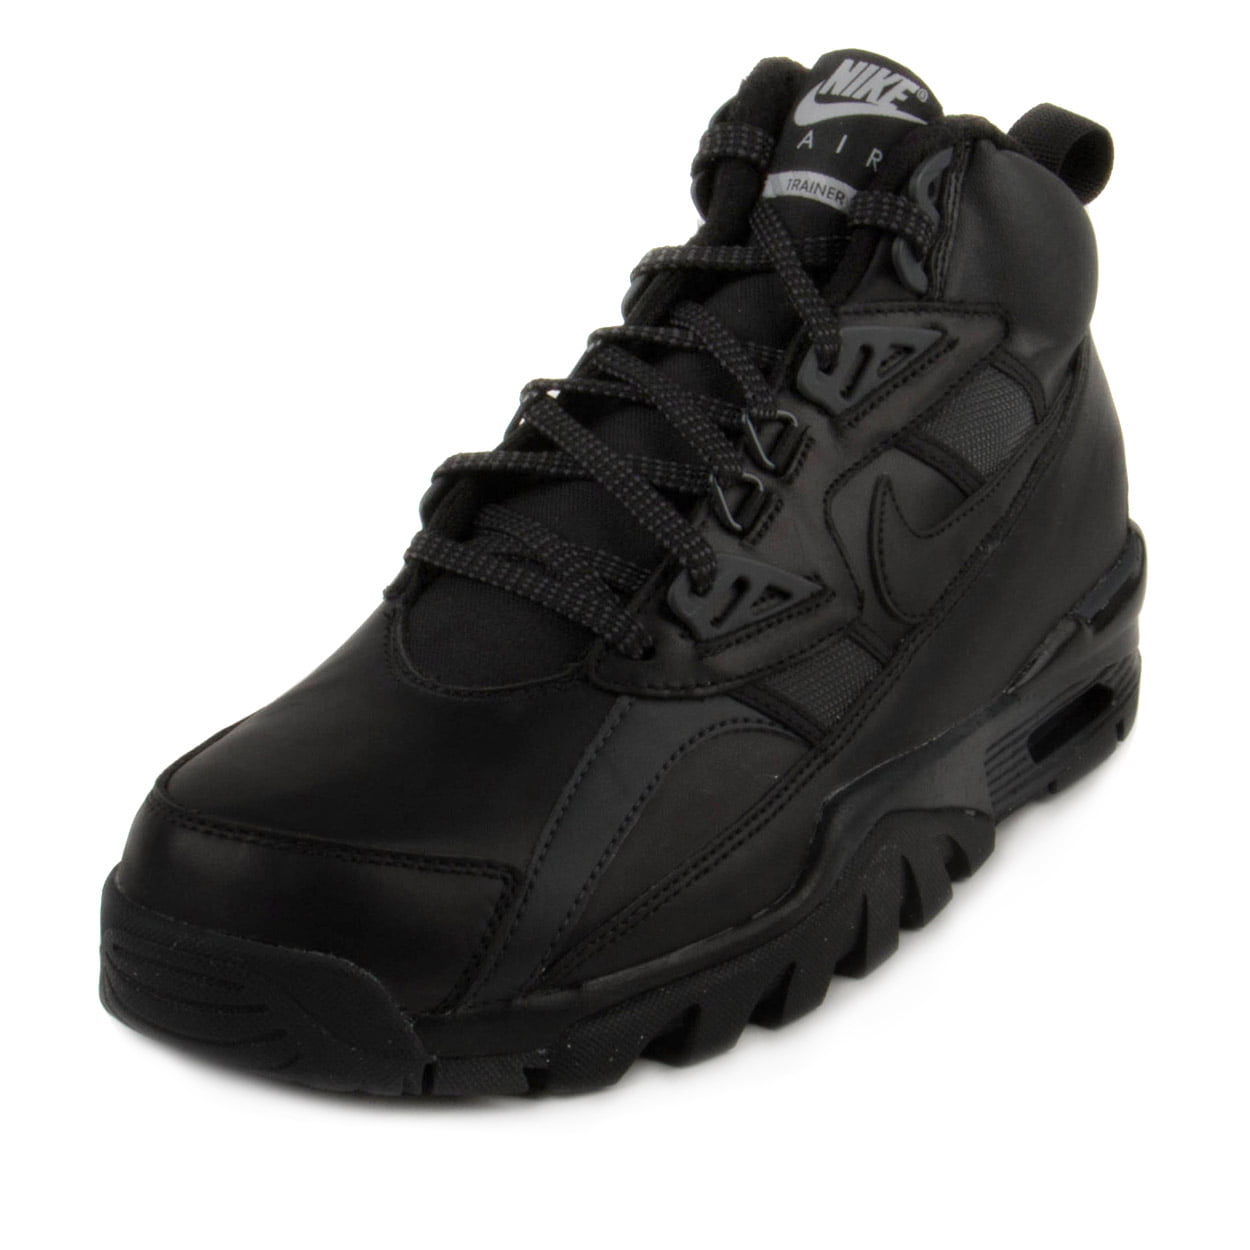 Nike Air Trainer Sneakerboot "Black" Black/Anthracite - Walmart.com